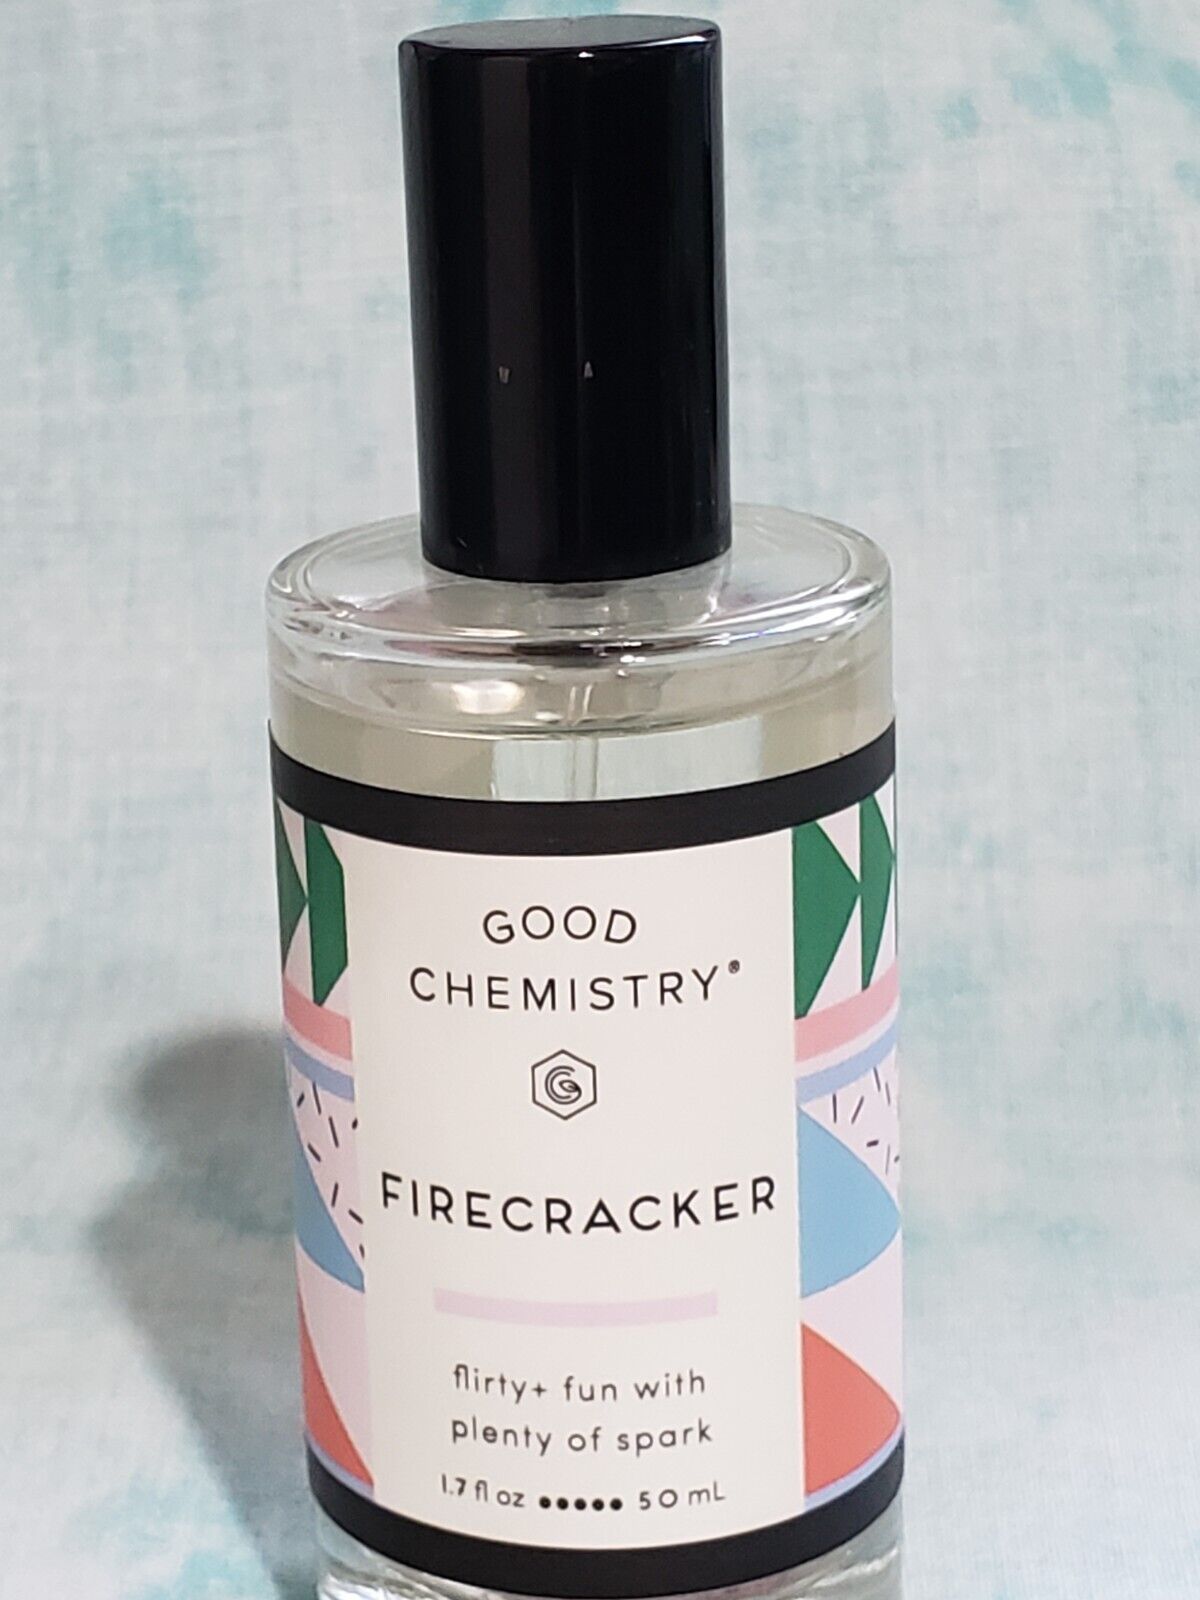 GOOD CHEMISTRY FIRECRACKER Perfume with Essential Oils 1.7 fl.oz USED 95% FULL